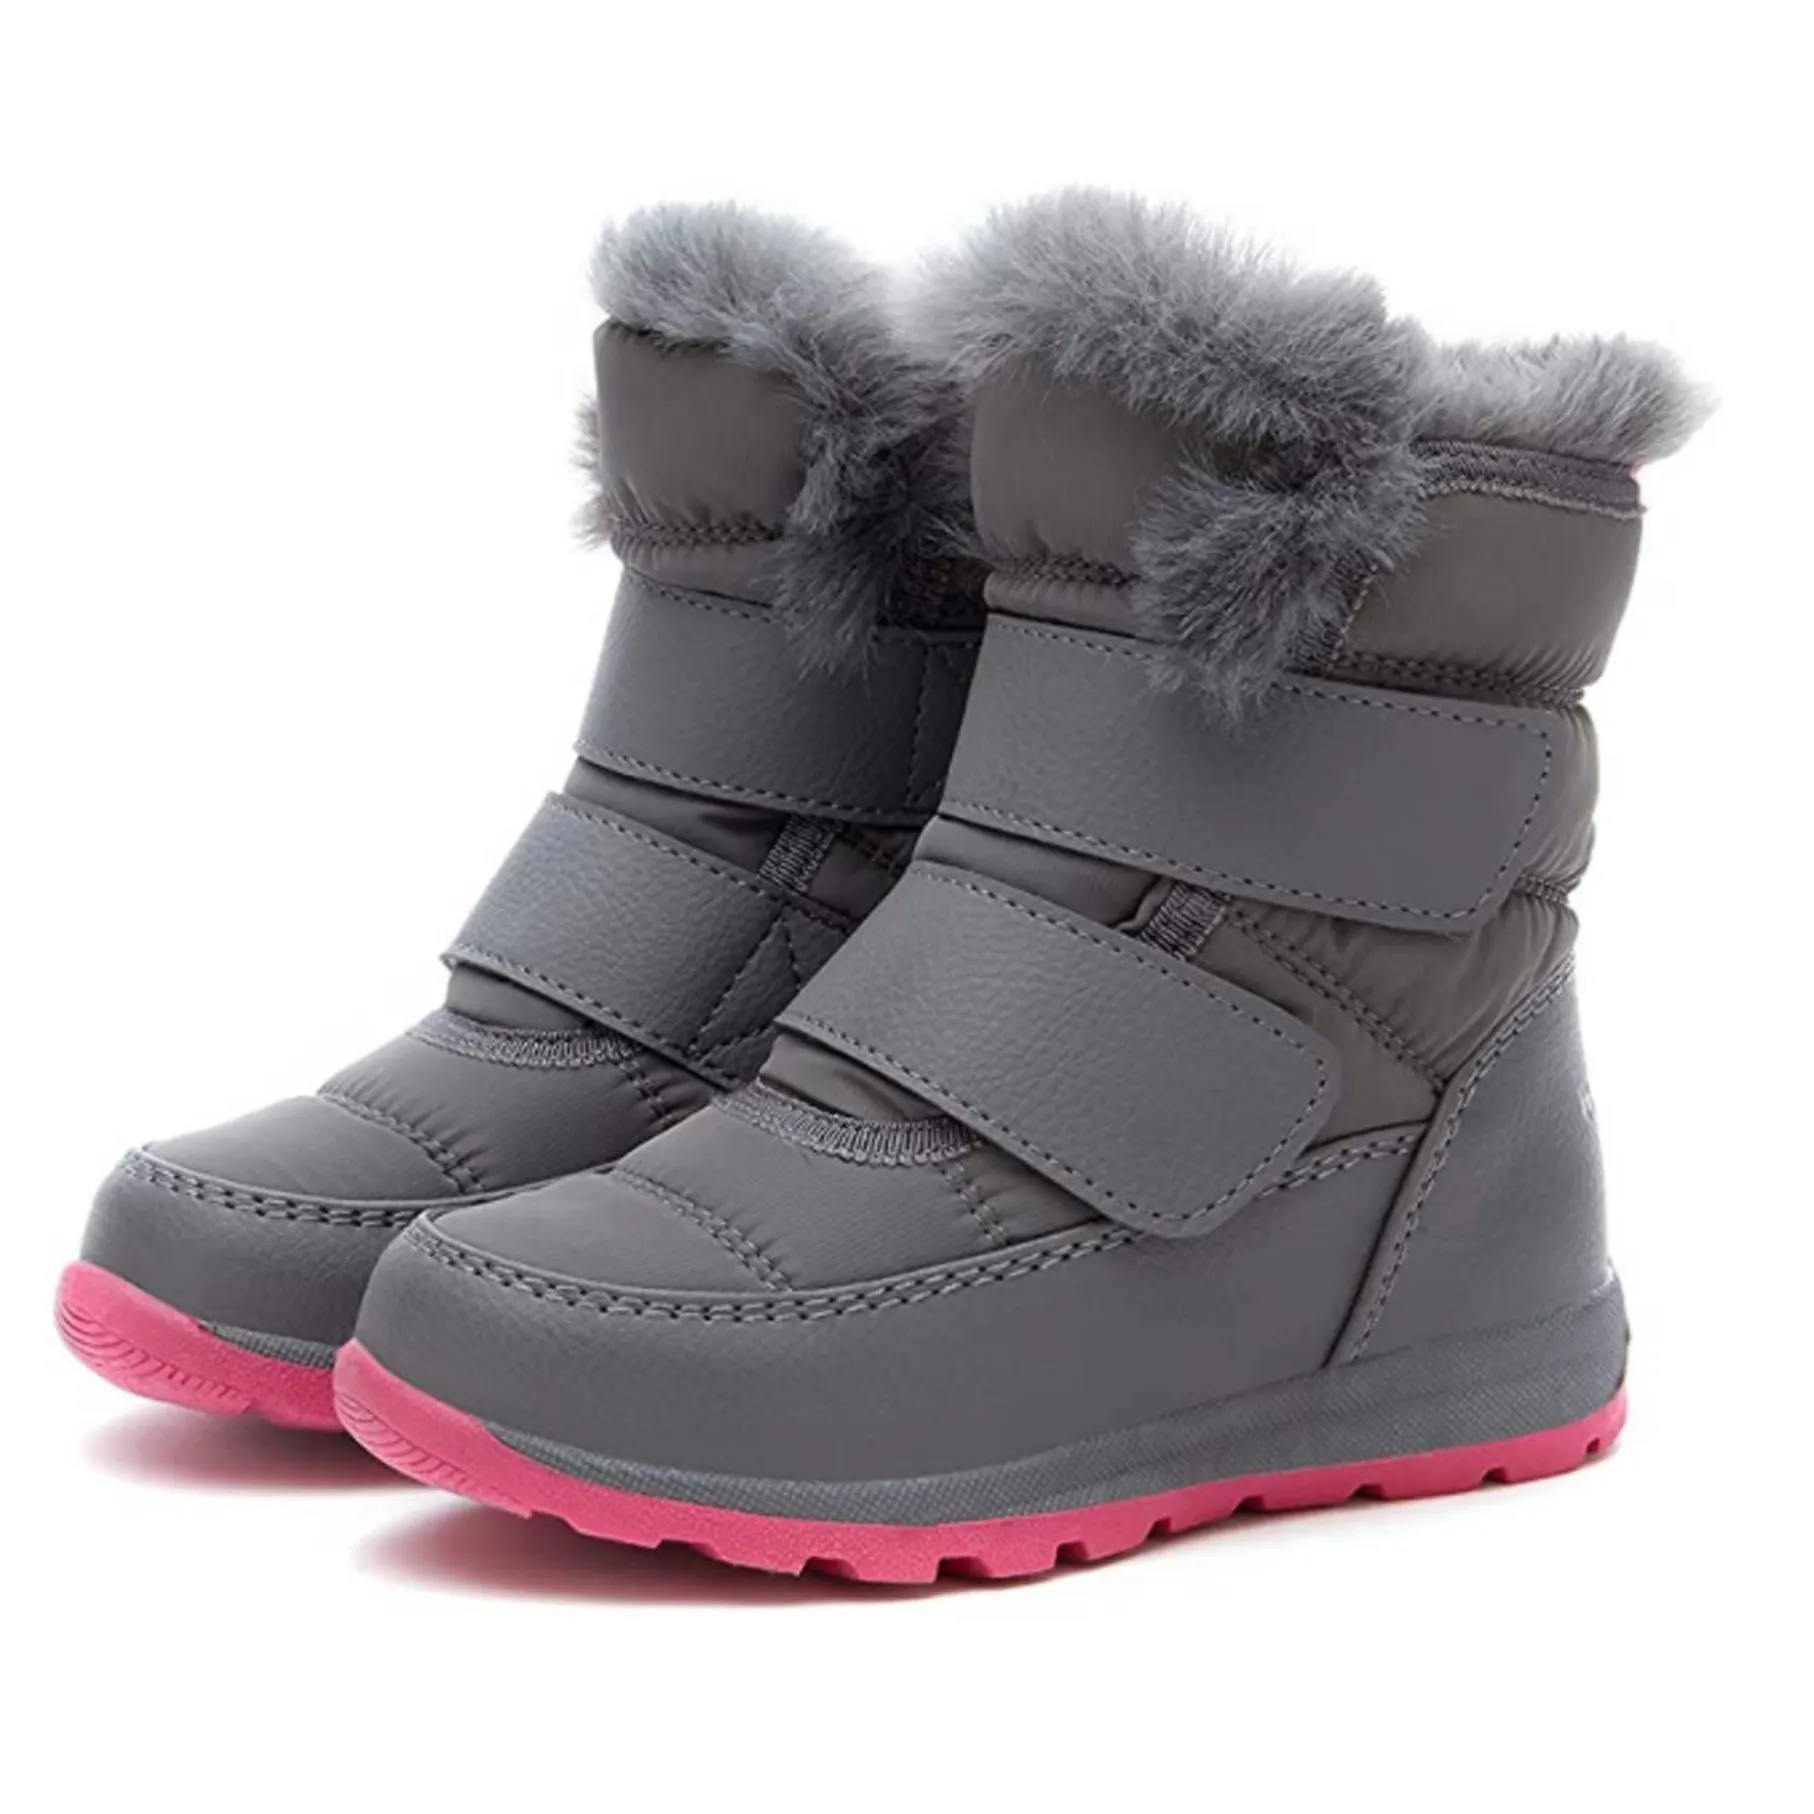 Kids waterproof Winter Snow Boots For Children warm Outdoor Footwear Shoes